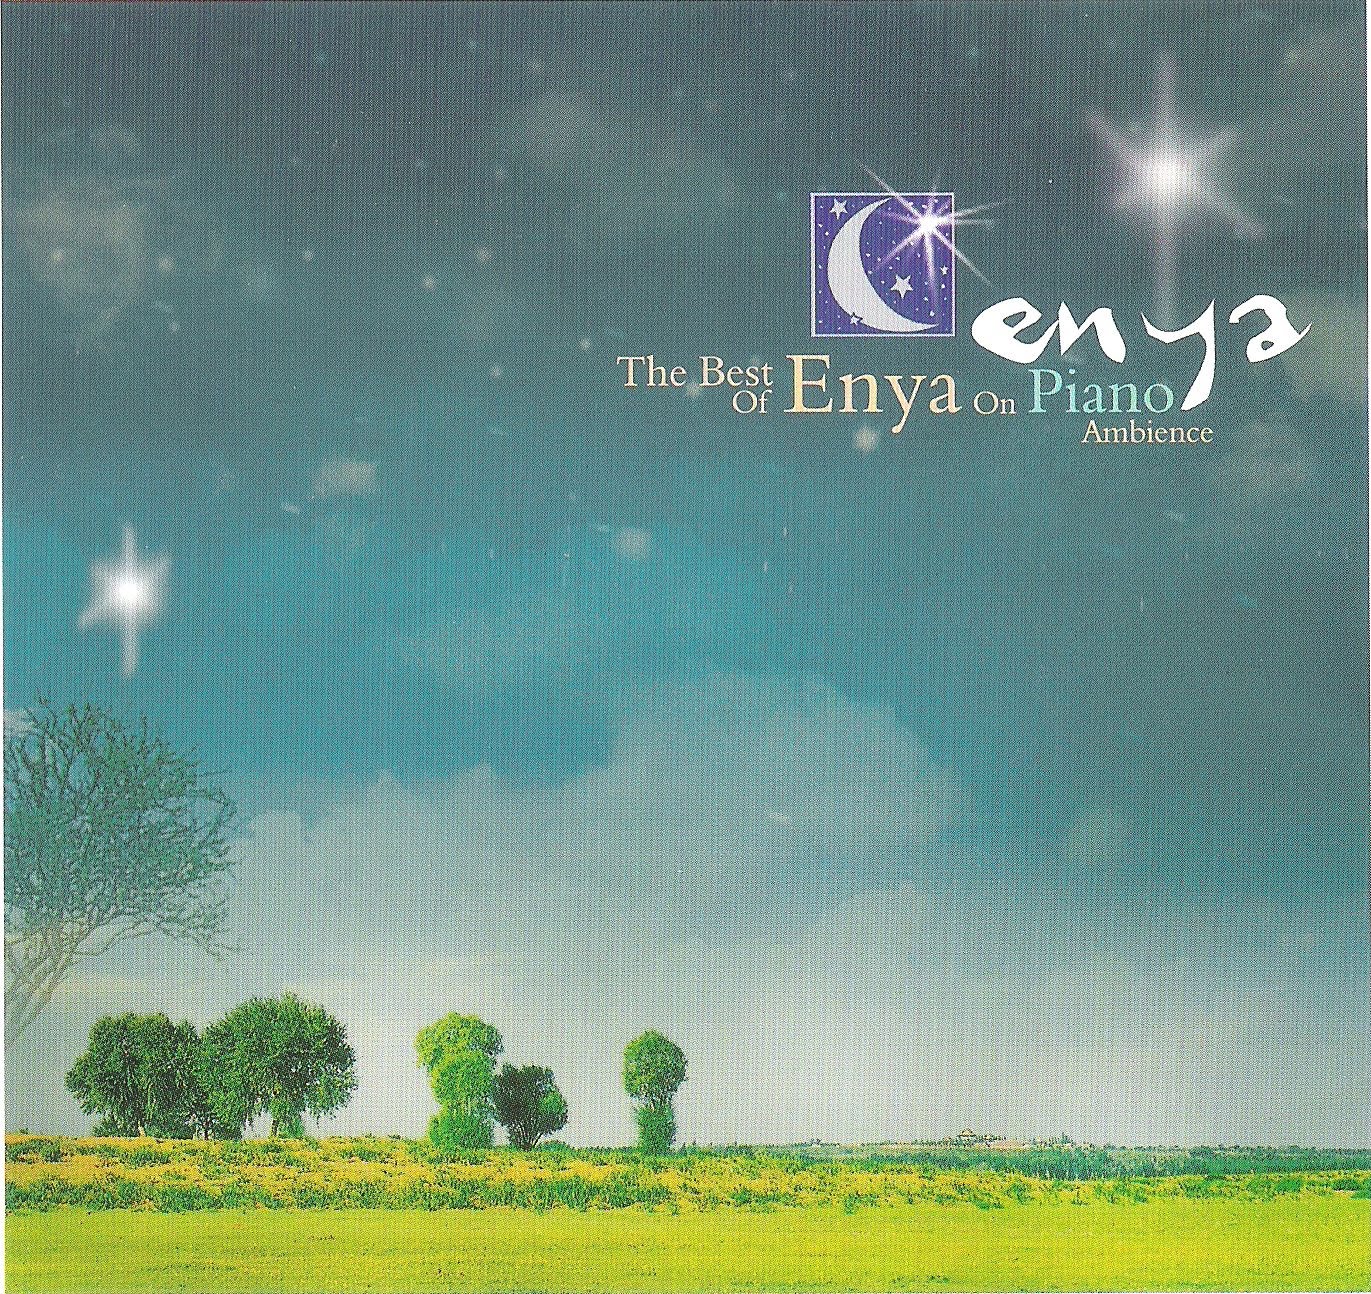 http://2.bp.blogspot.com/_XOTJ5x6oyfI/TH3DQeQV4YI/AAAAAAAAGNY/GBjMYFRMLbo/s1600/Enya+-+The+Best+Of+Enya+On+Piano+%282007%29+Cover.jpg